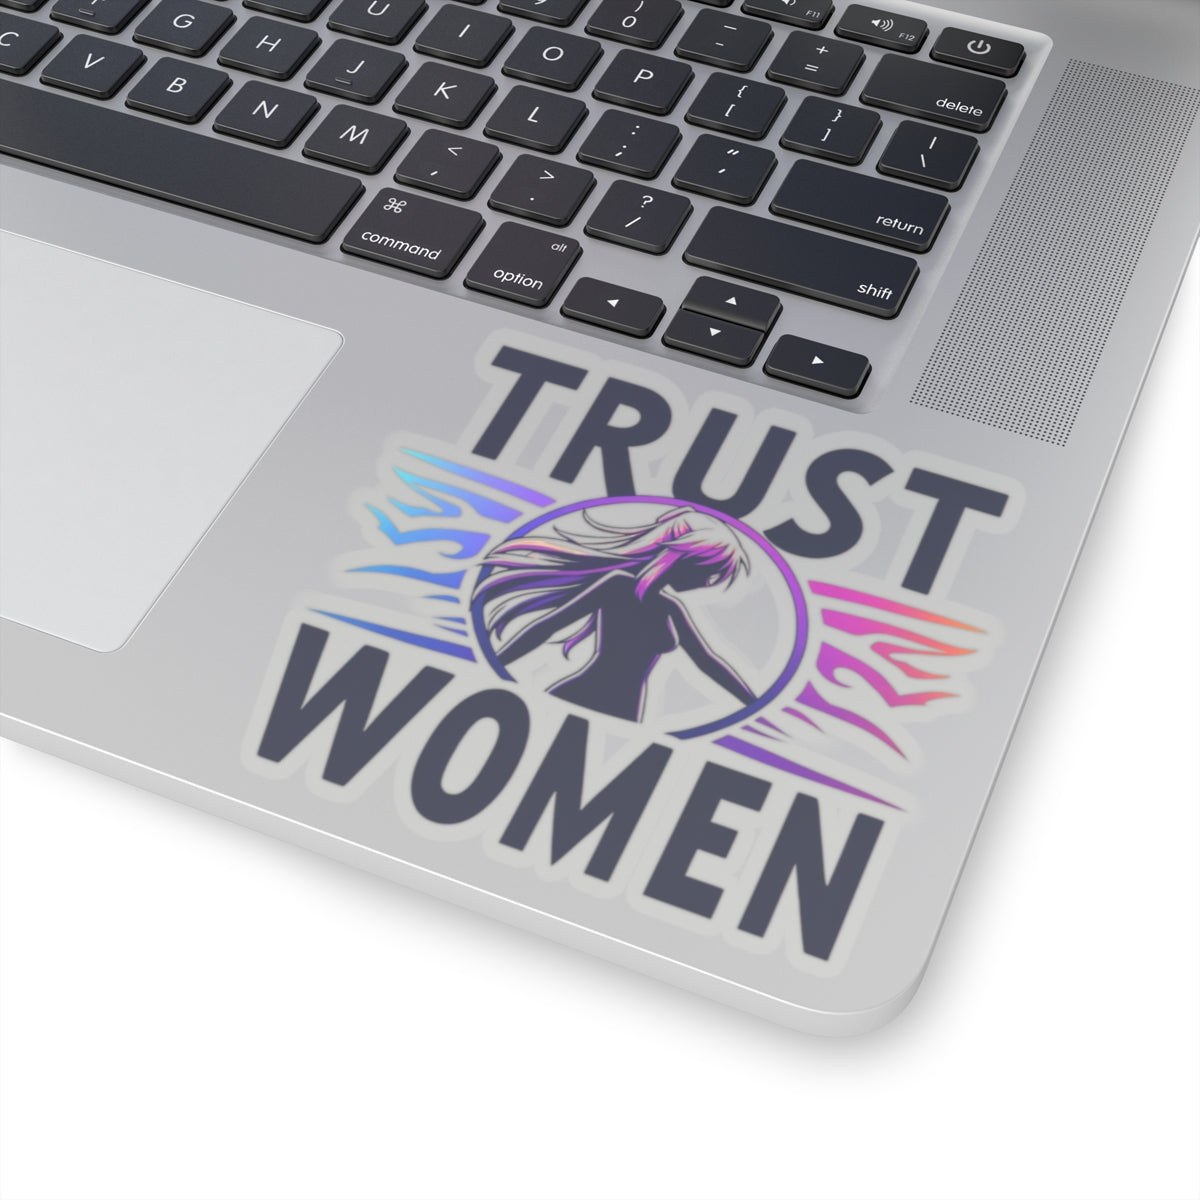 Bold Statement Sticker: Trust Women! Bodily Autonomy is a Right!